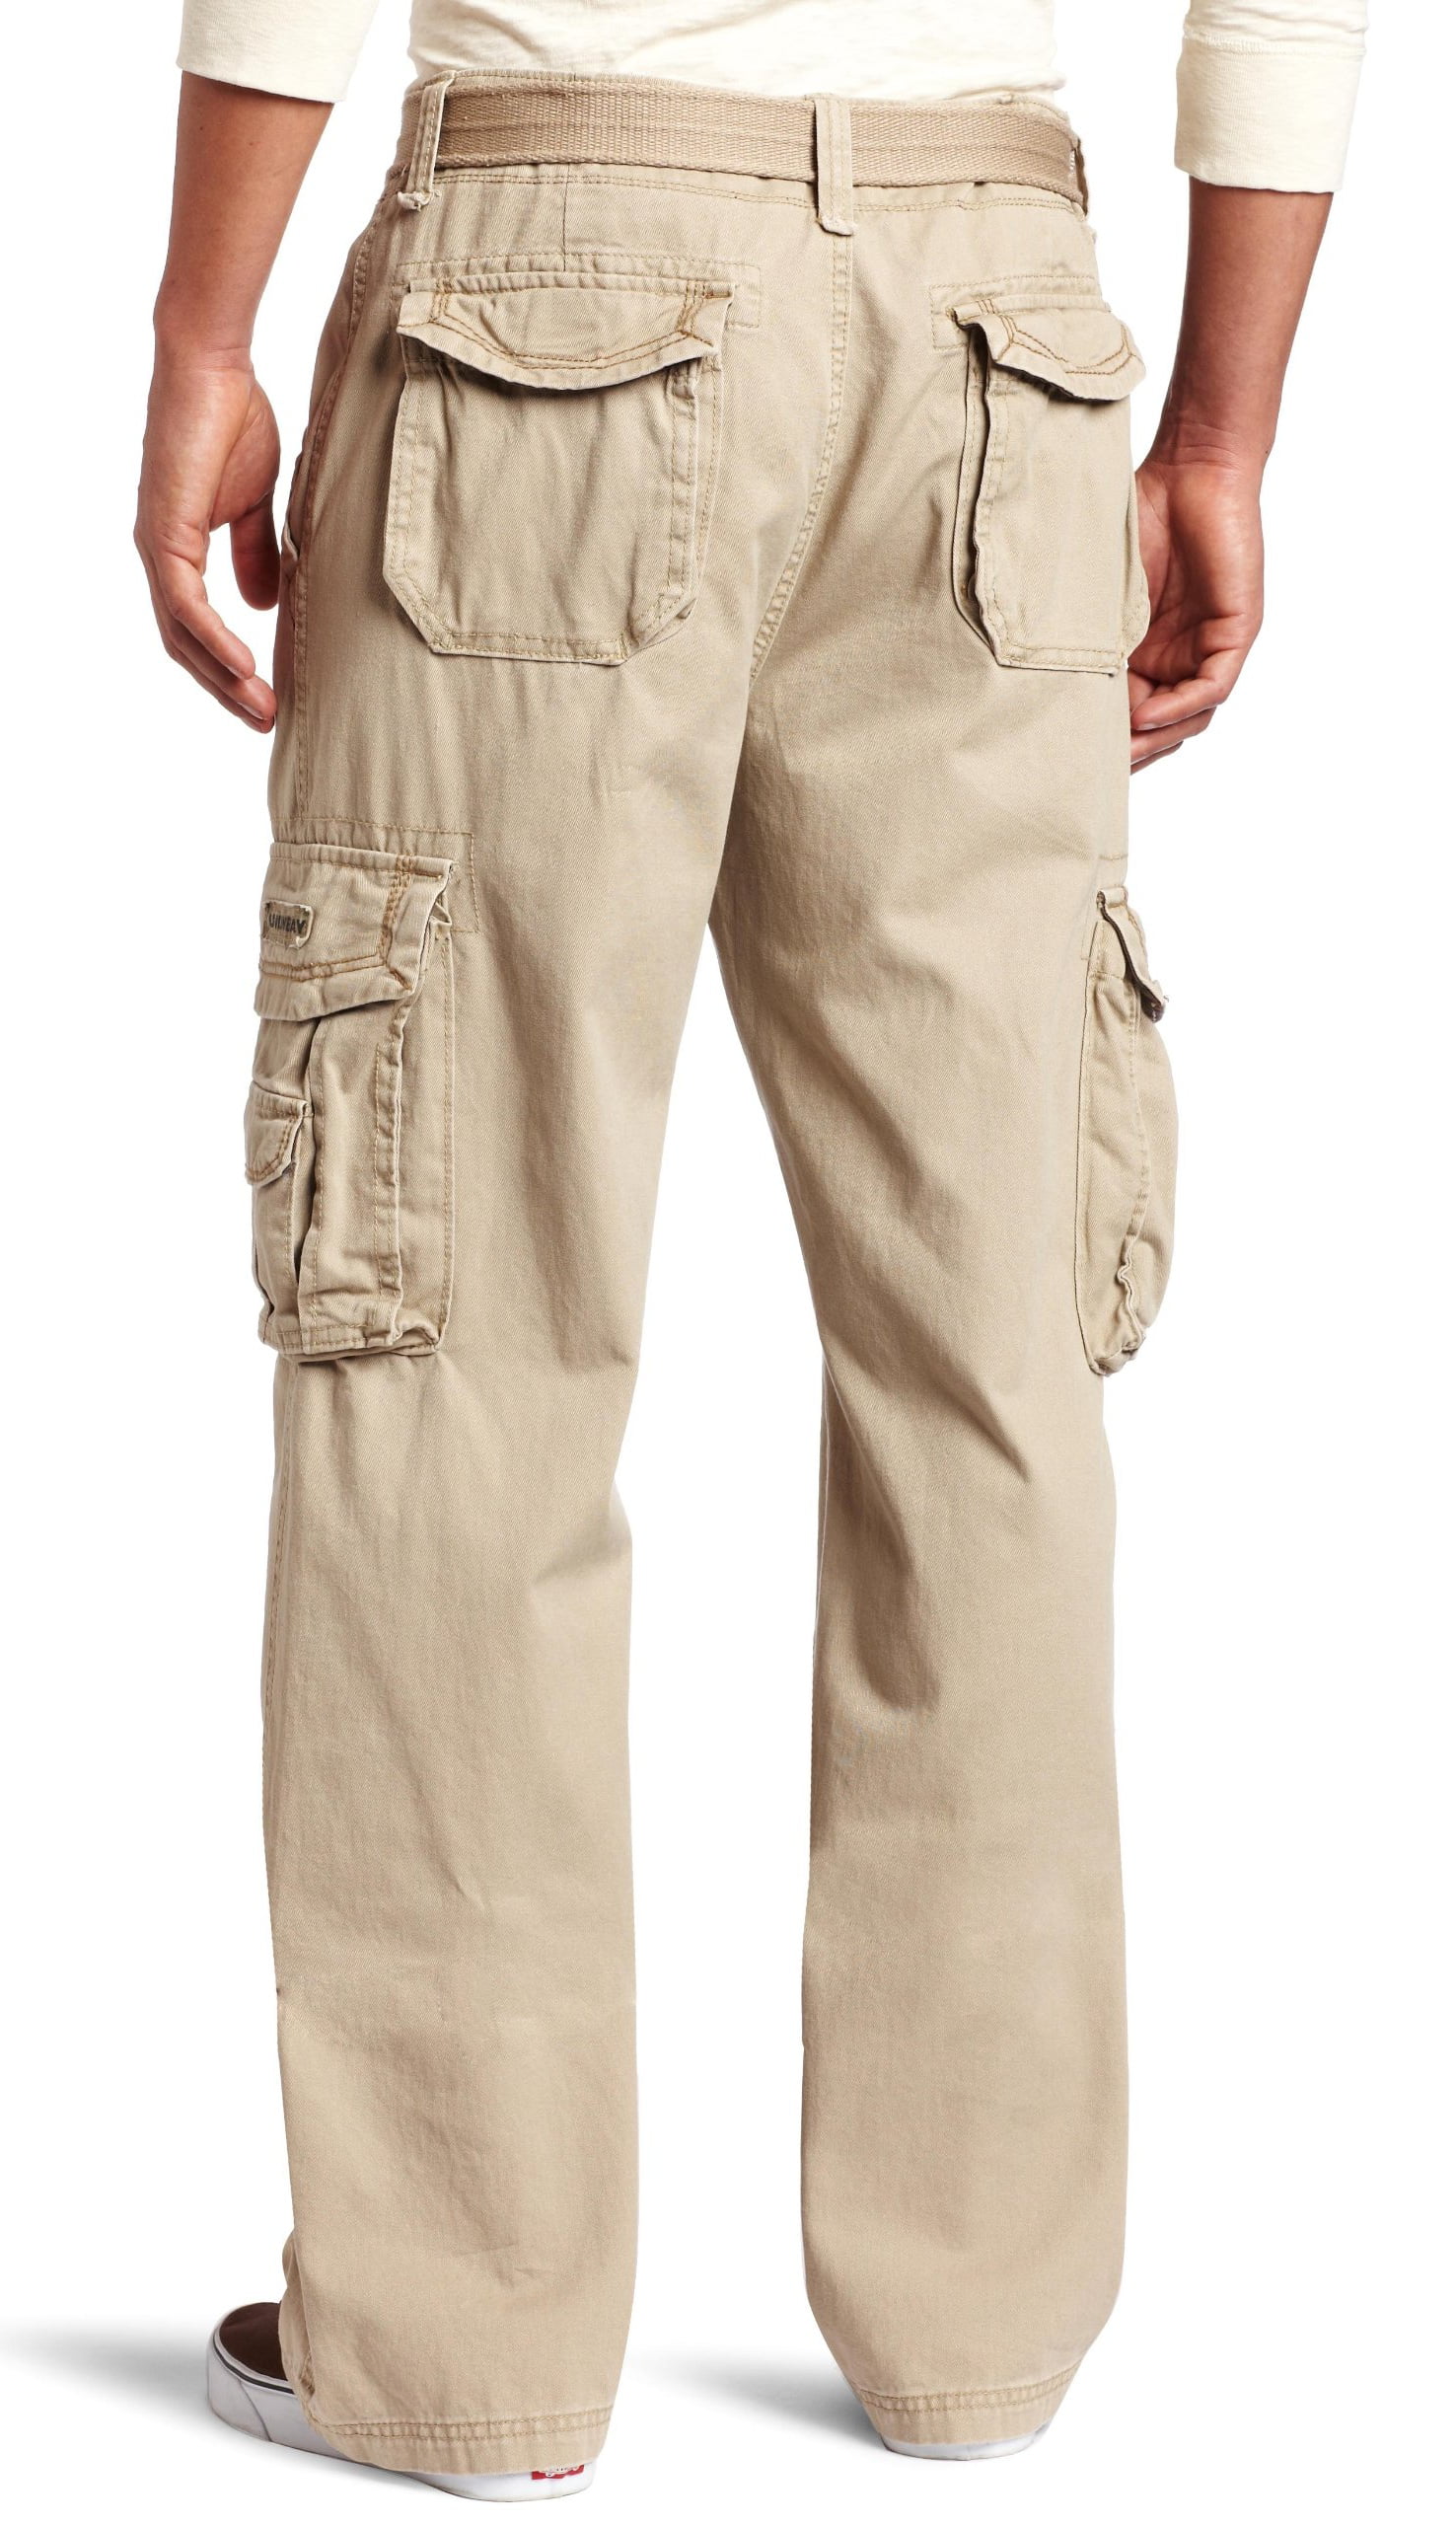 MEN'S UNIONBAY CARGO Shorts Pants Casual Cotton flint gren combat W 34 BNWT  £17.89 - PicClick UK